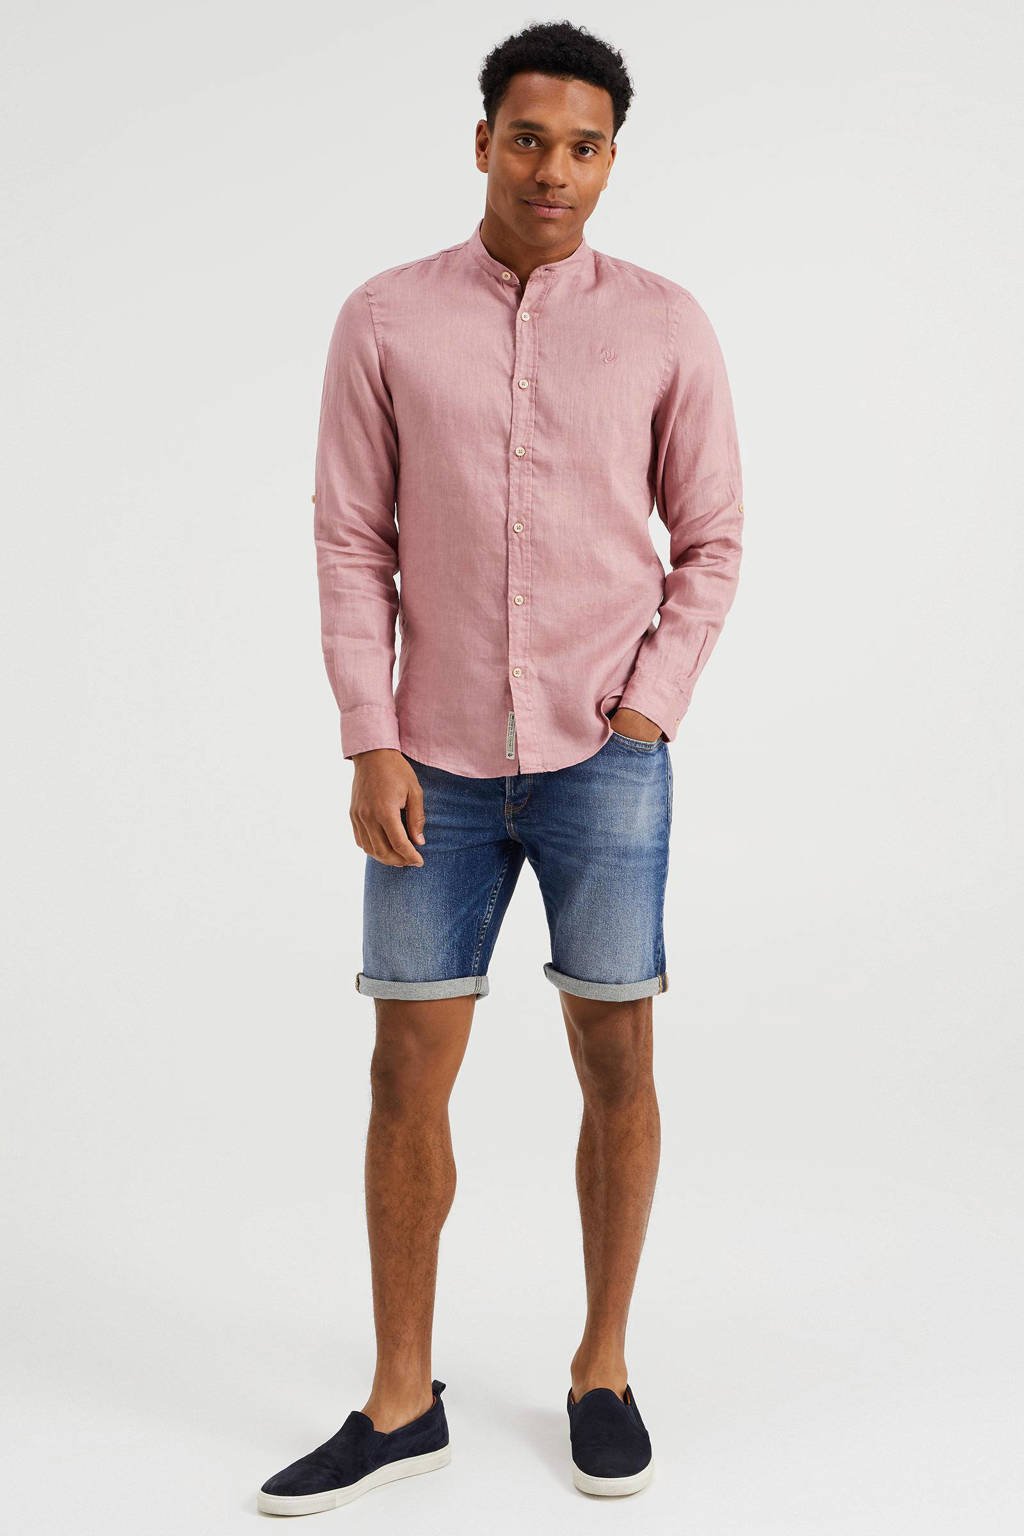 wenselijk eiwit Zwitsers WE Fashion linnen slim fit overhemd roze | wehkamp